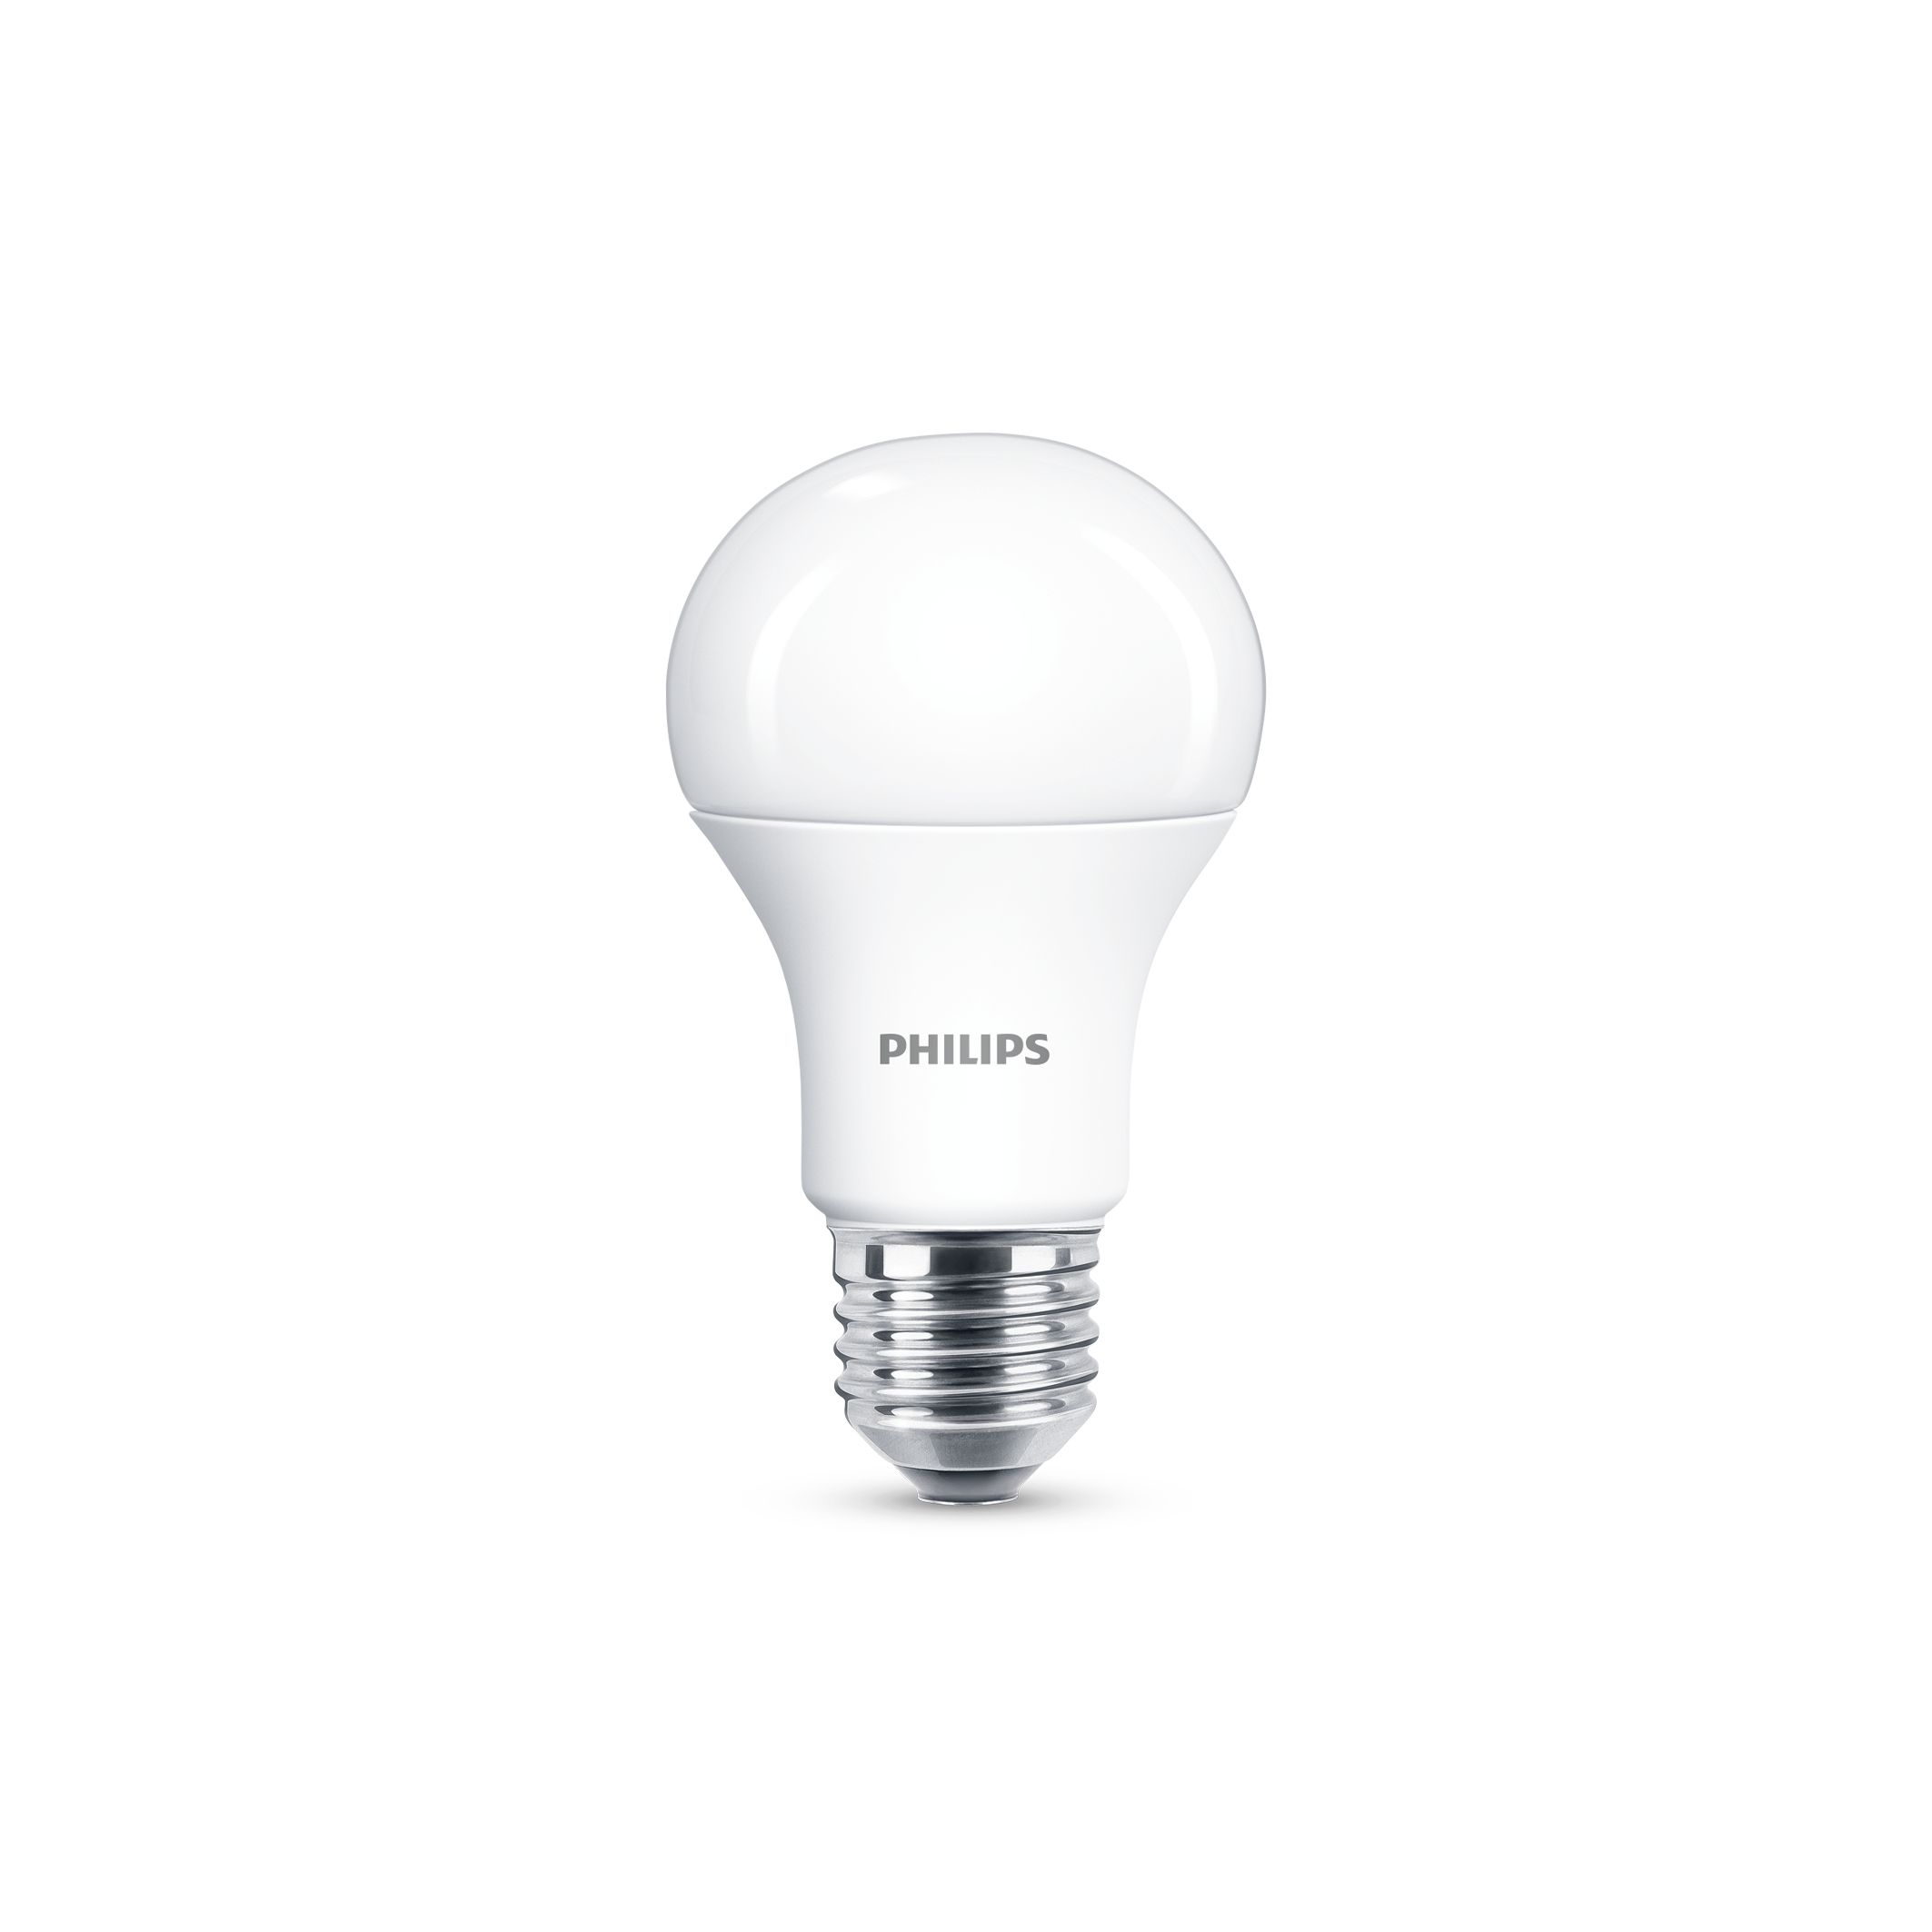 Standard Led Bulbs 6979538 Philips Lighting